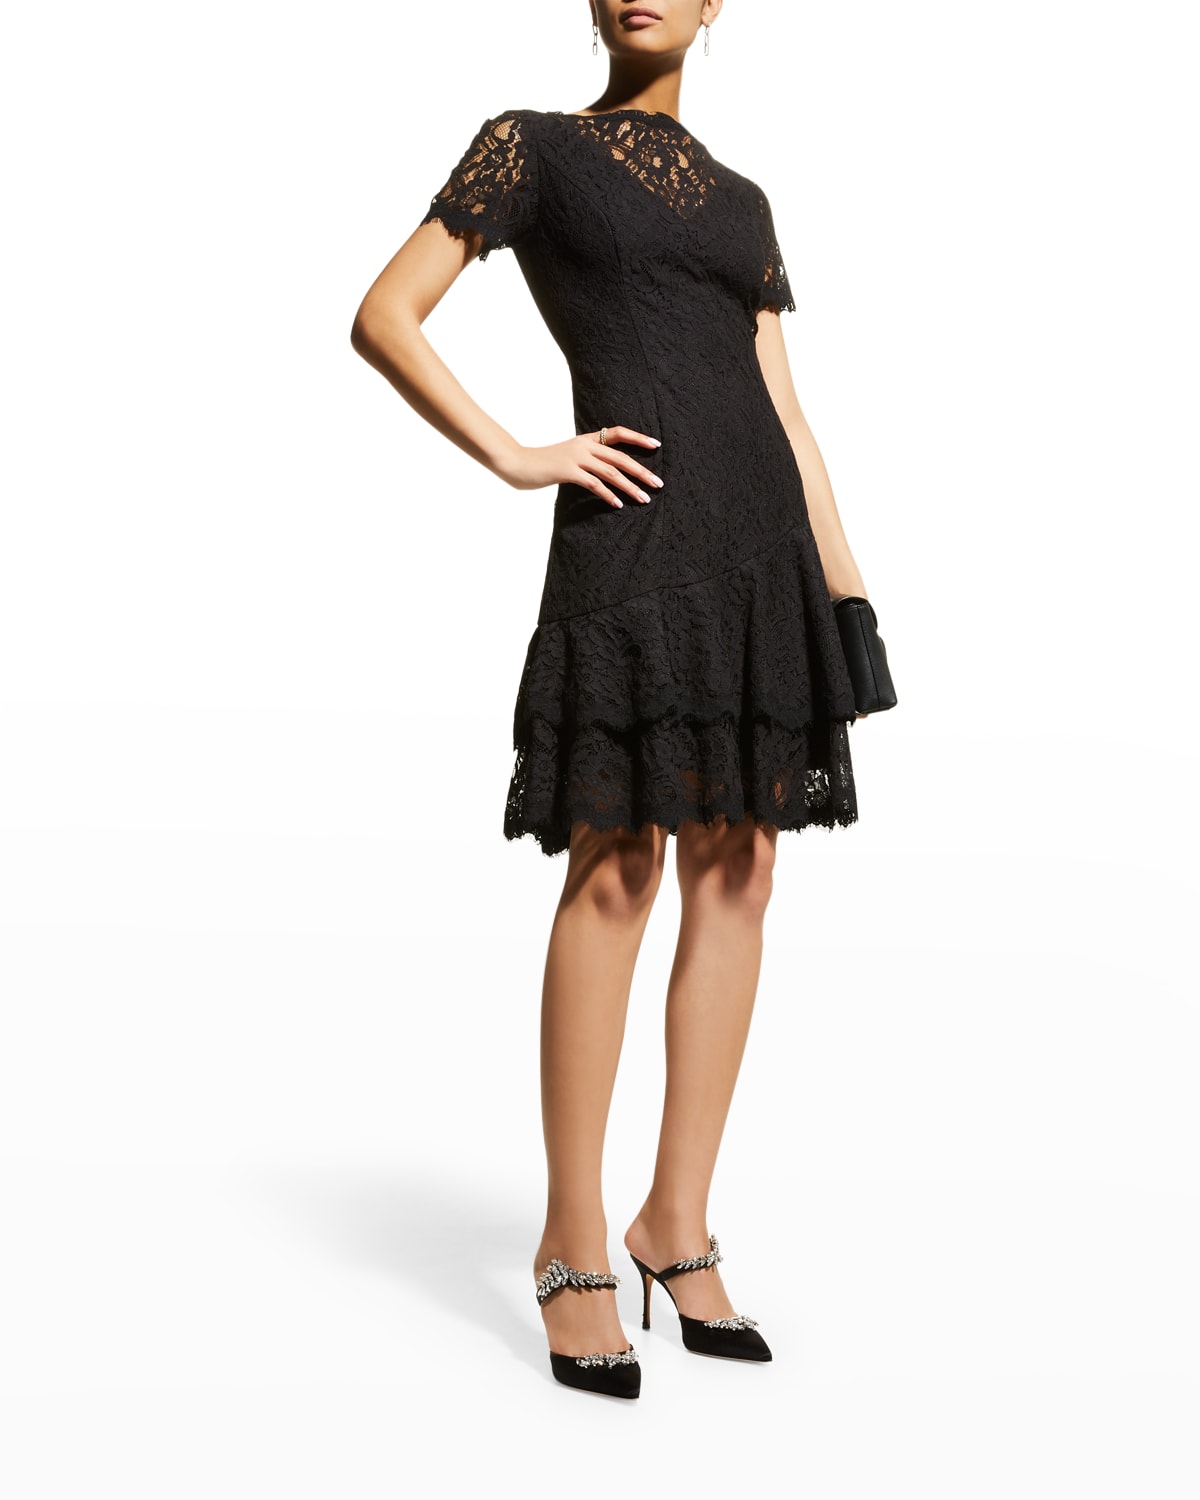 Black Short Sleeve Cocktail Dress ...